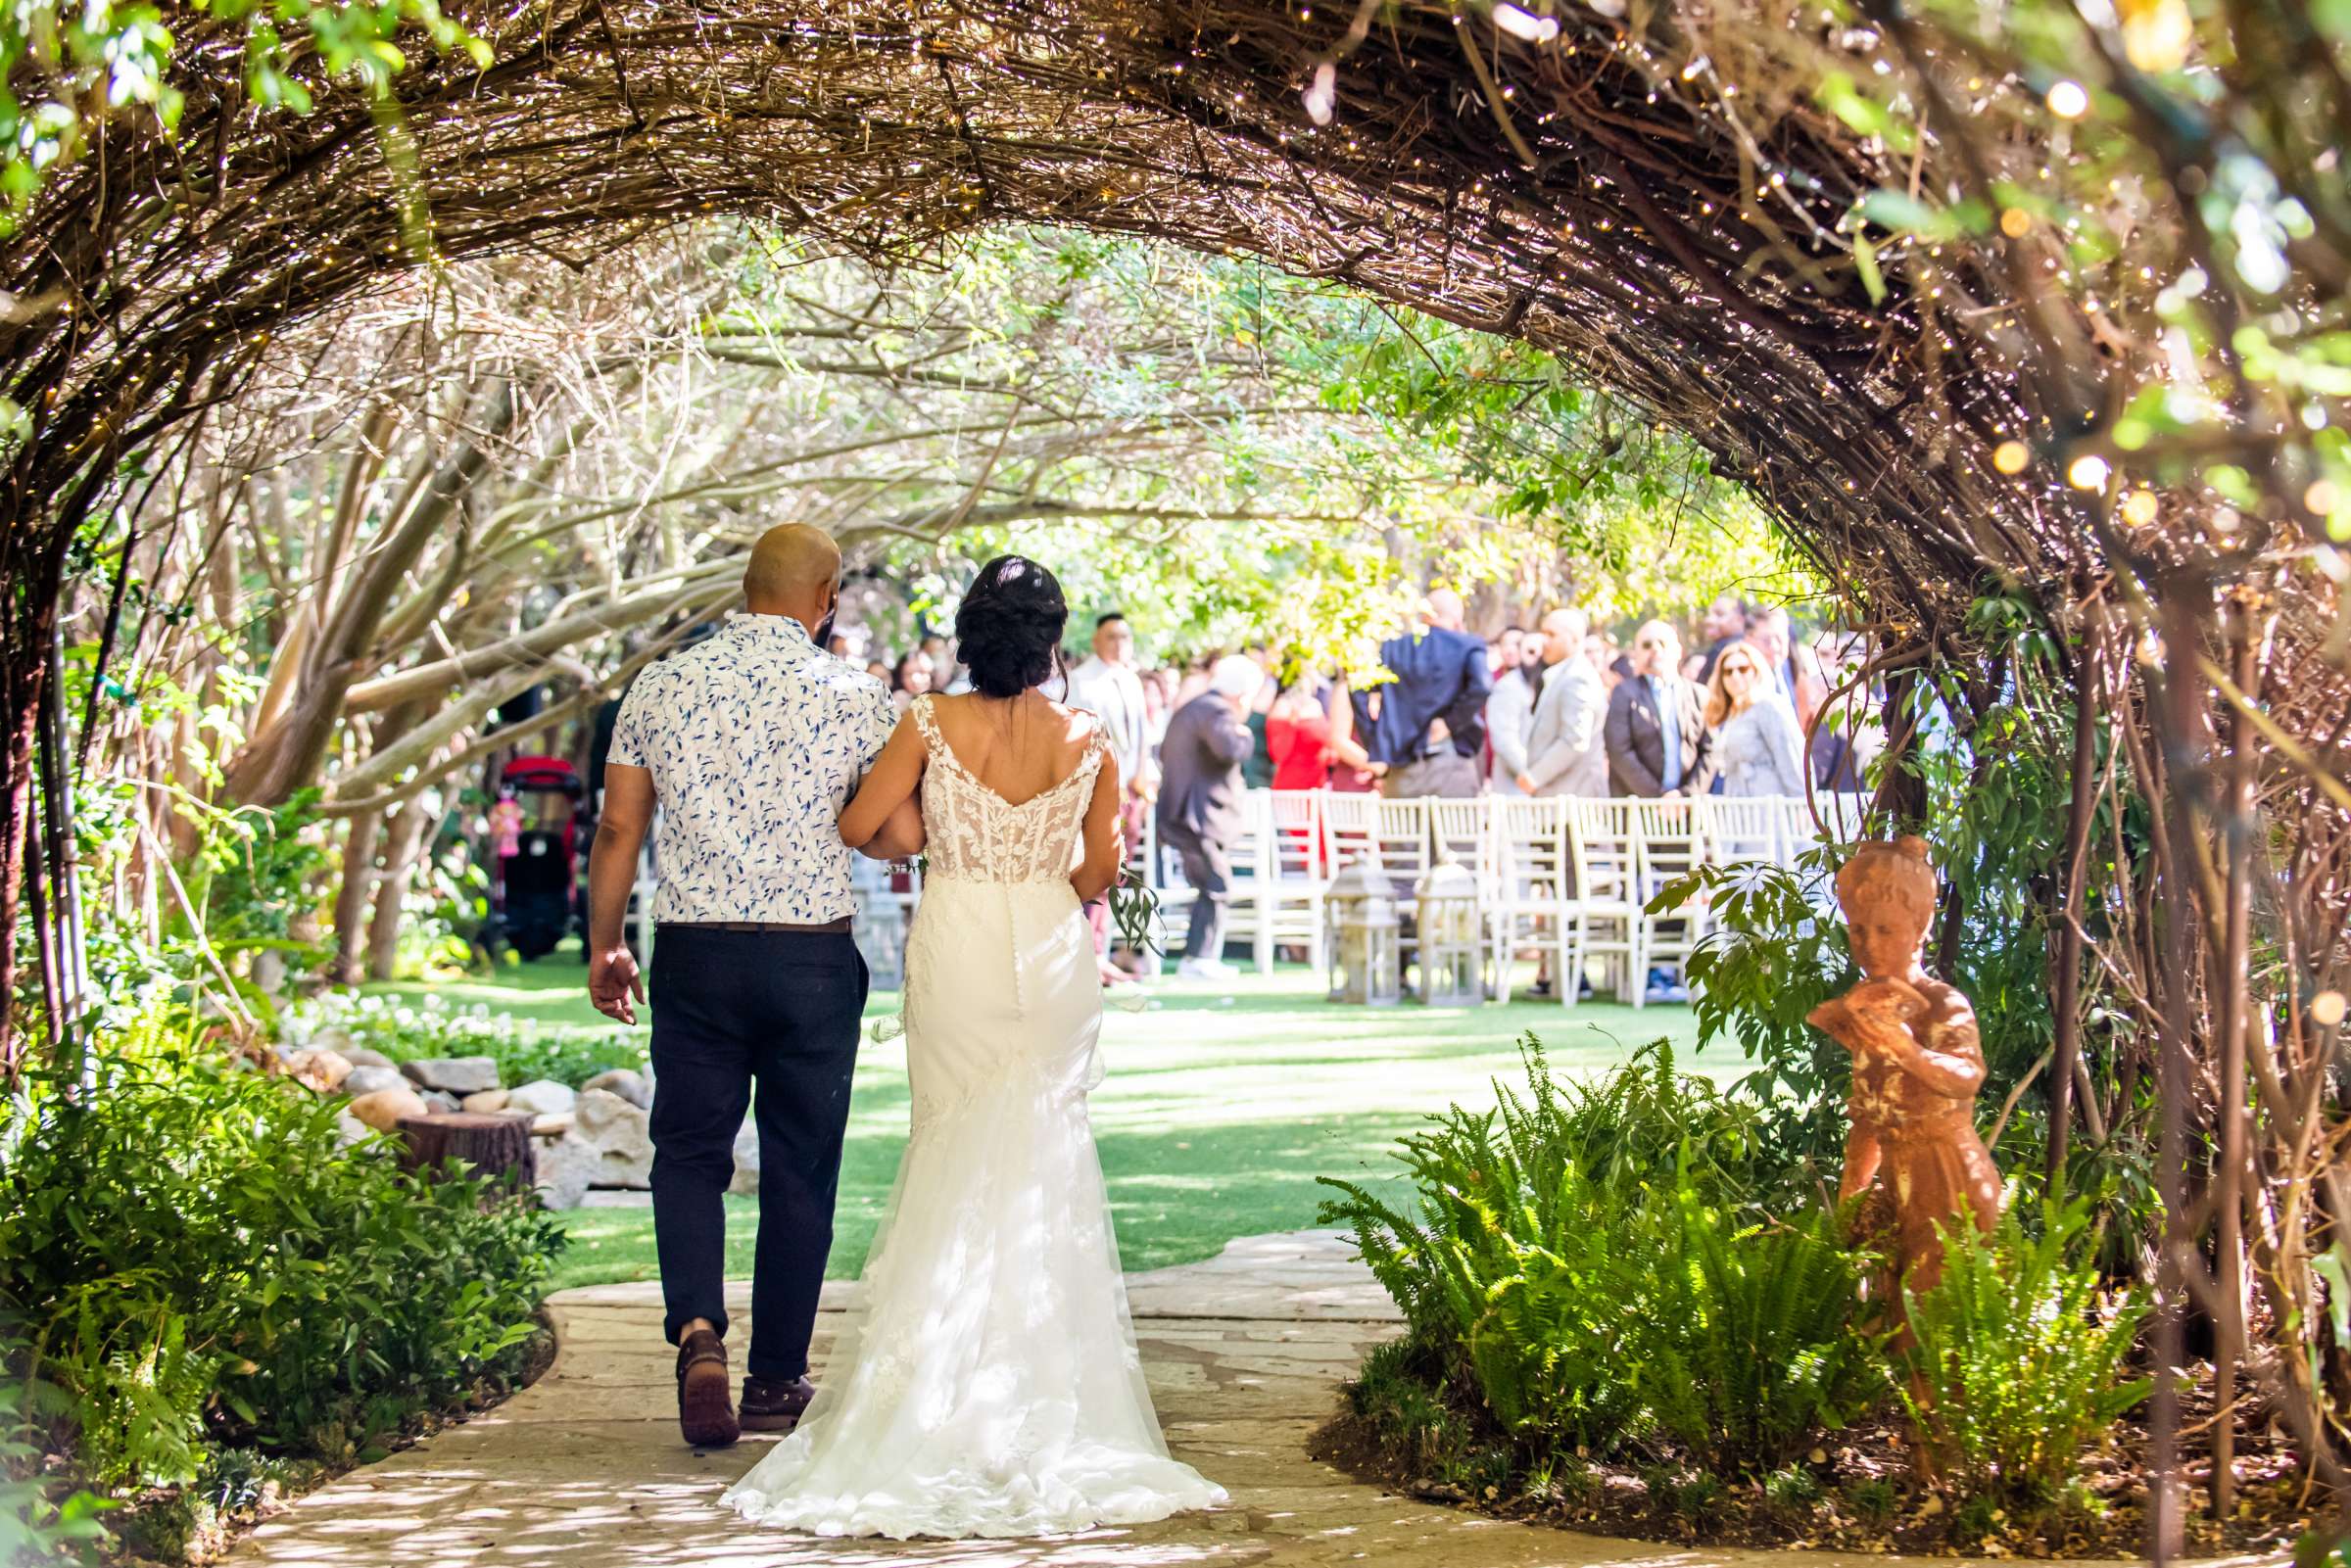 Twin Oaks House & Gardens Wedding Estate Wedding, Lottiesha and Christian Wedding Photo #4 by True Photography